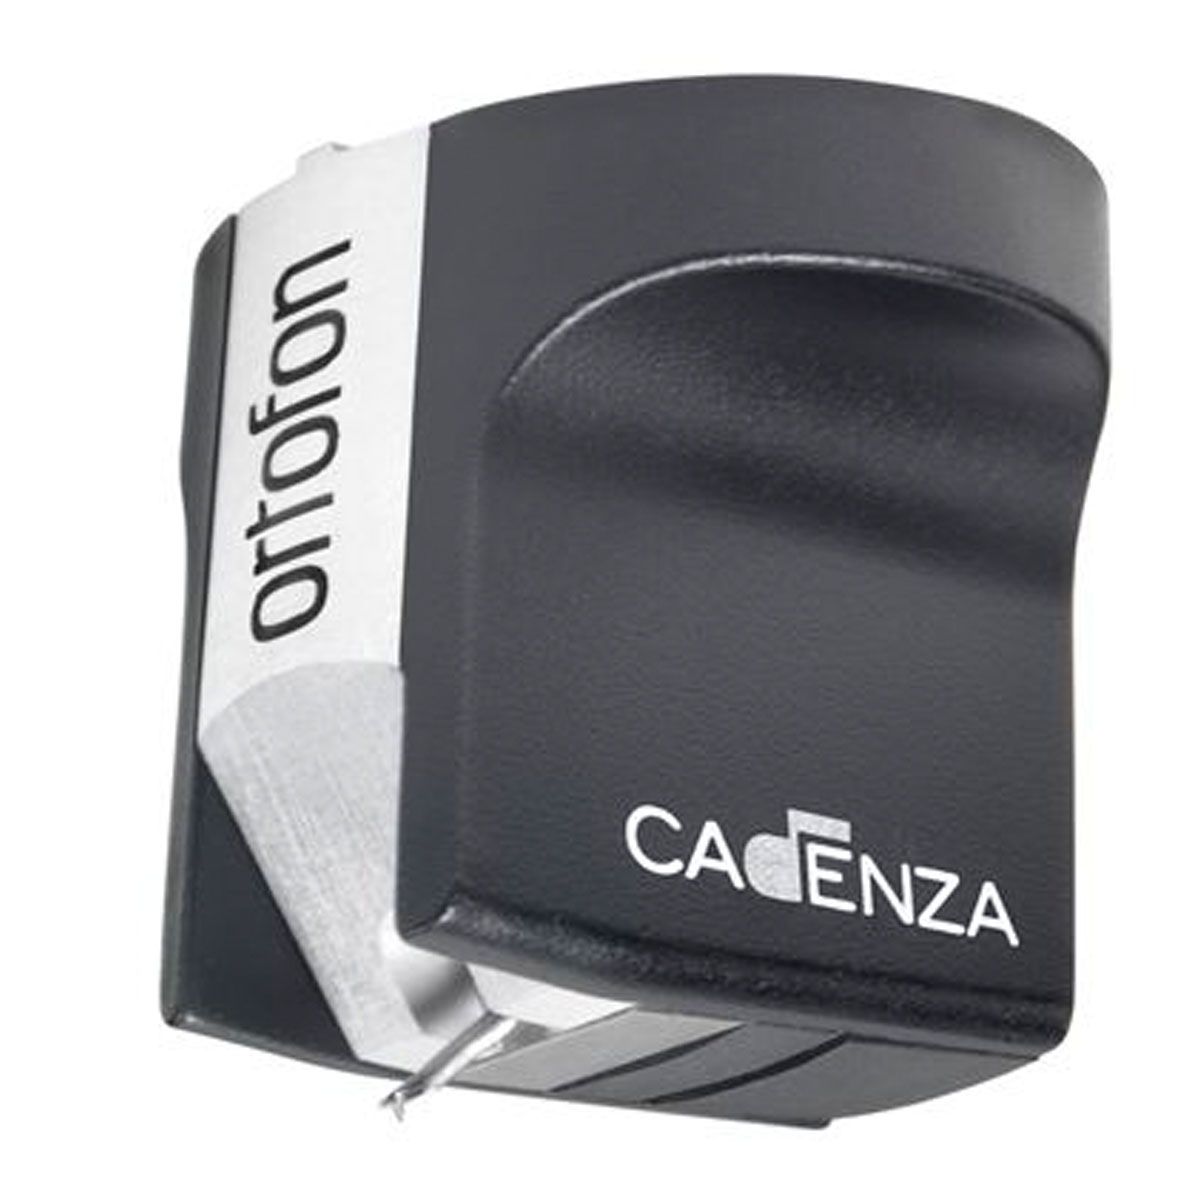 Ortofon MC Cadenza Mono Turntable Cartridge